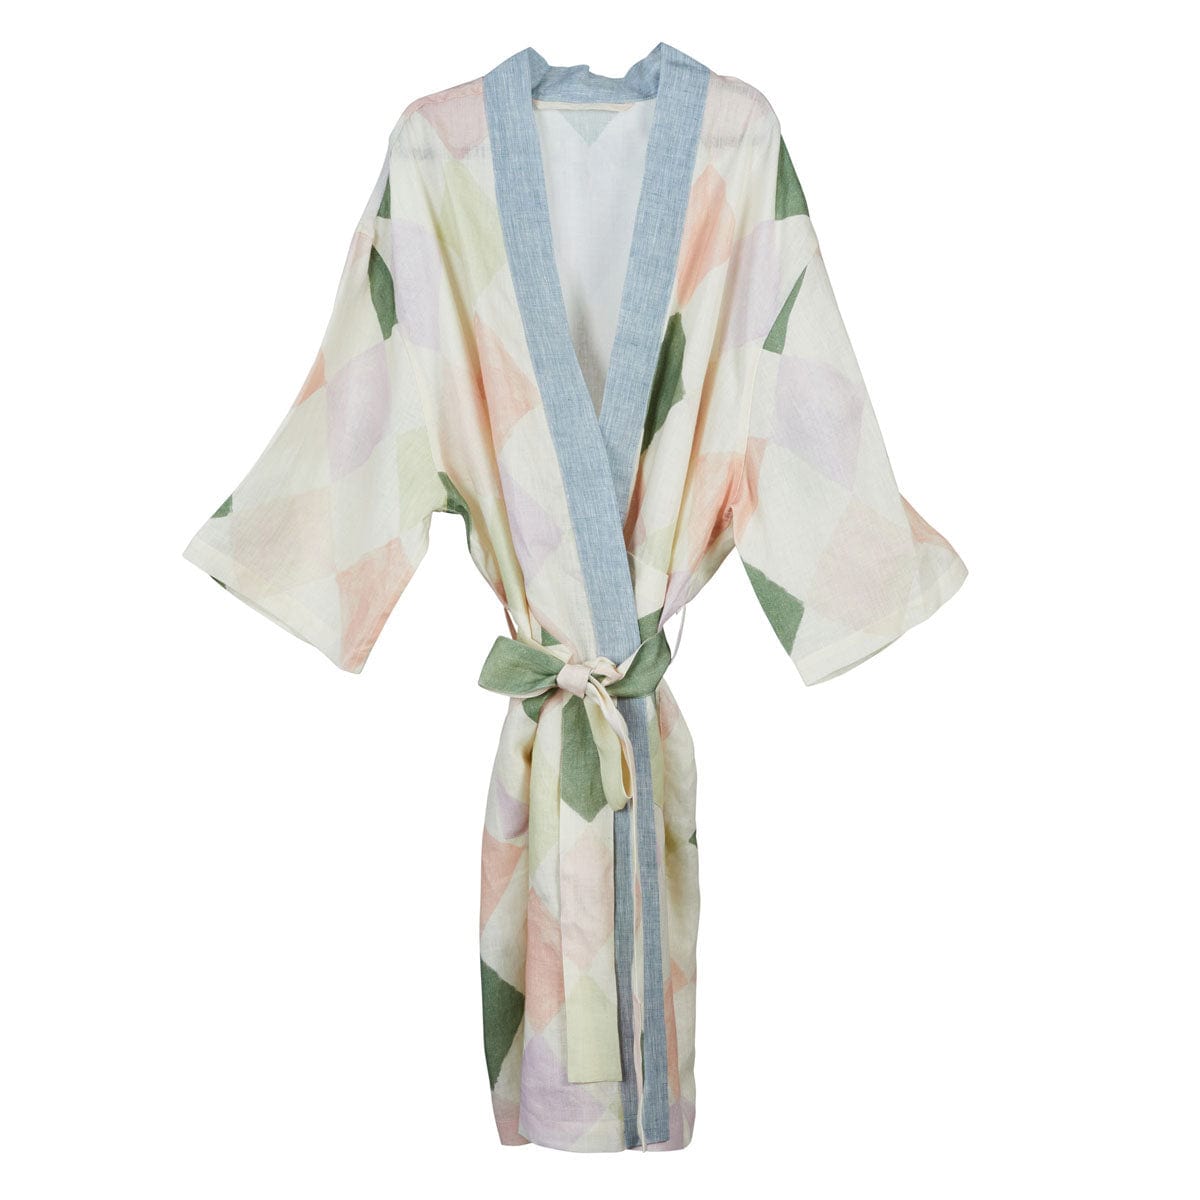 Harlequin – Linen Bath Robe